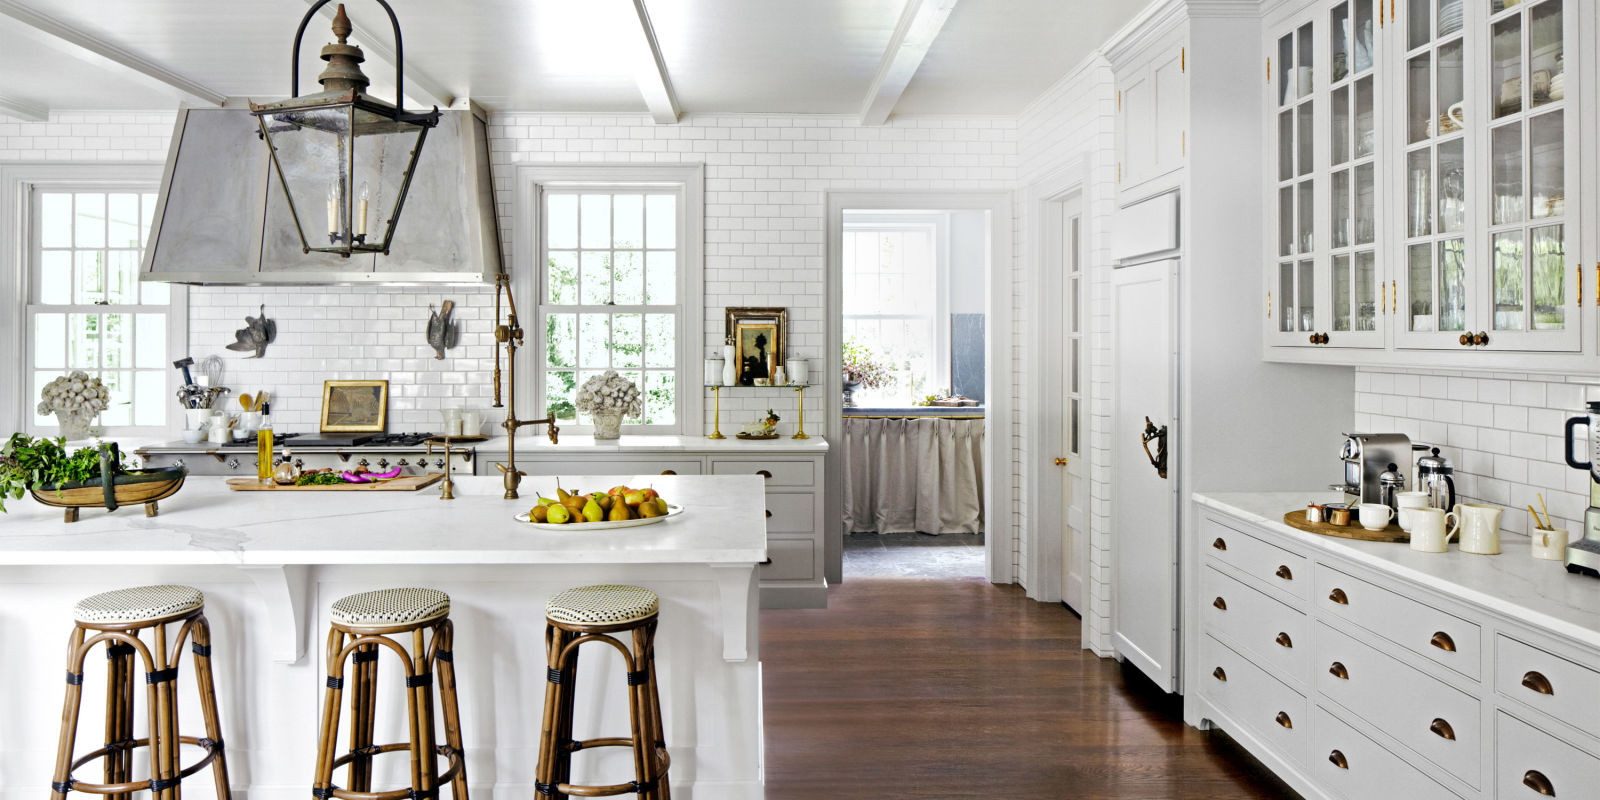 Best ideas about White Kitchen Decor
. Save or Pin 24 Best White Kitchens of White Kitchen Design Now.